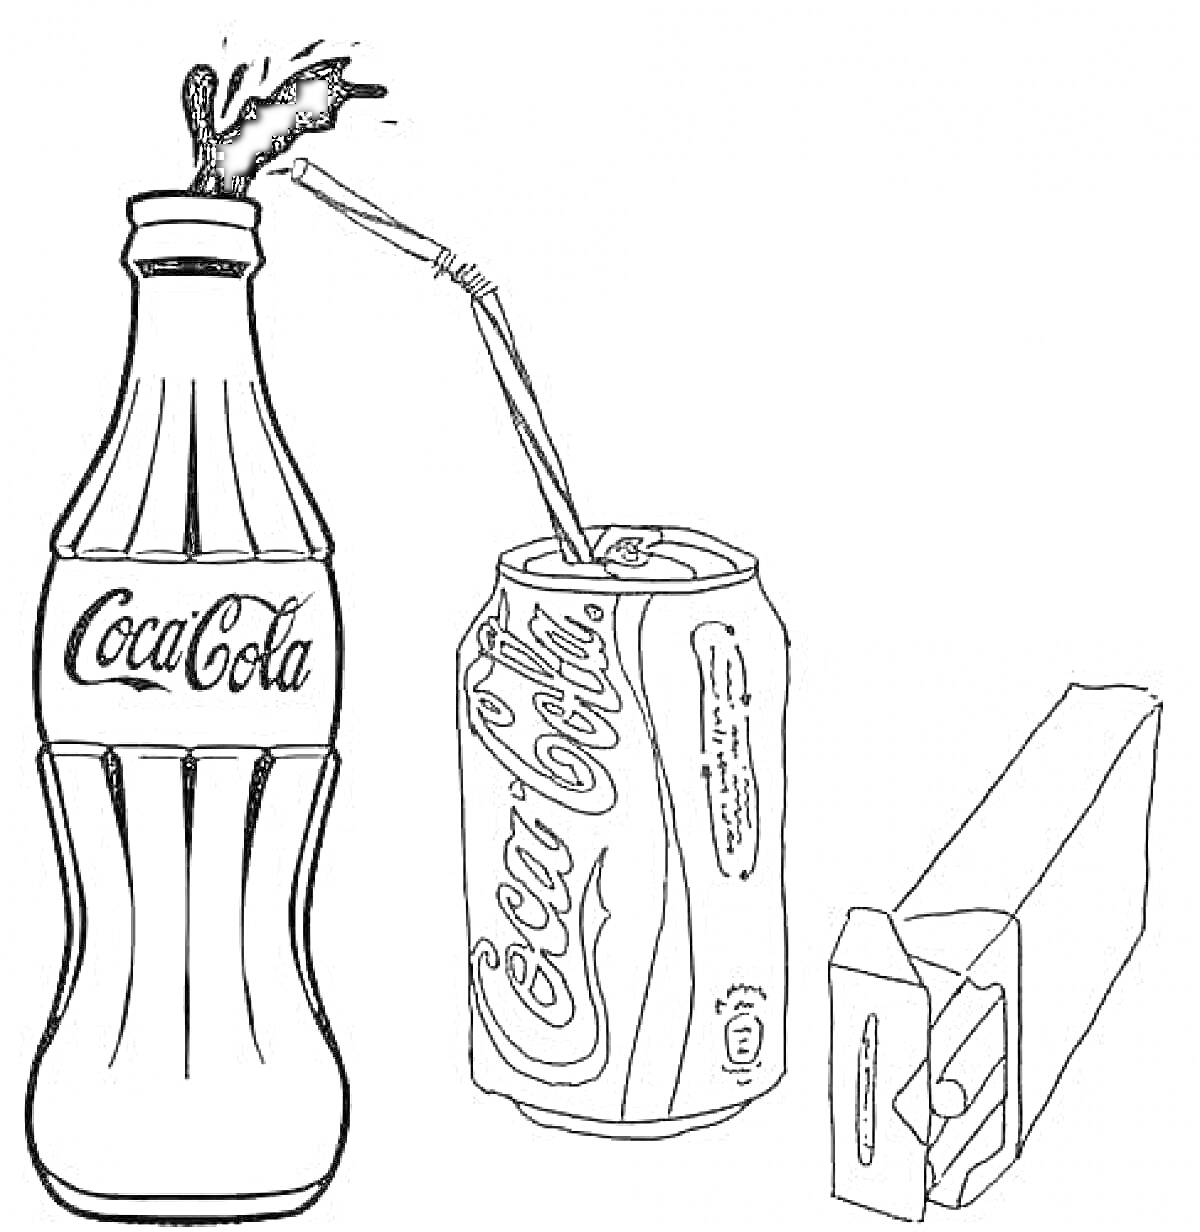 Раскраска Бутылка Кока Колы, банка Кока Колы с соломинкой и пачка сигарет